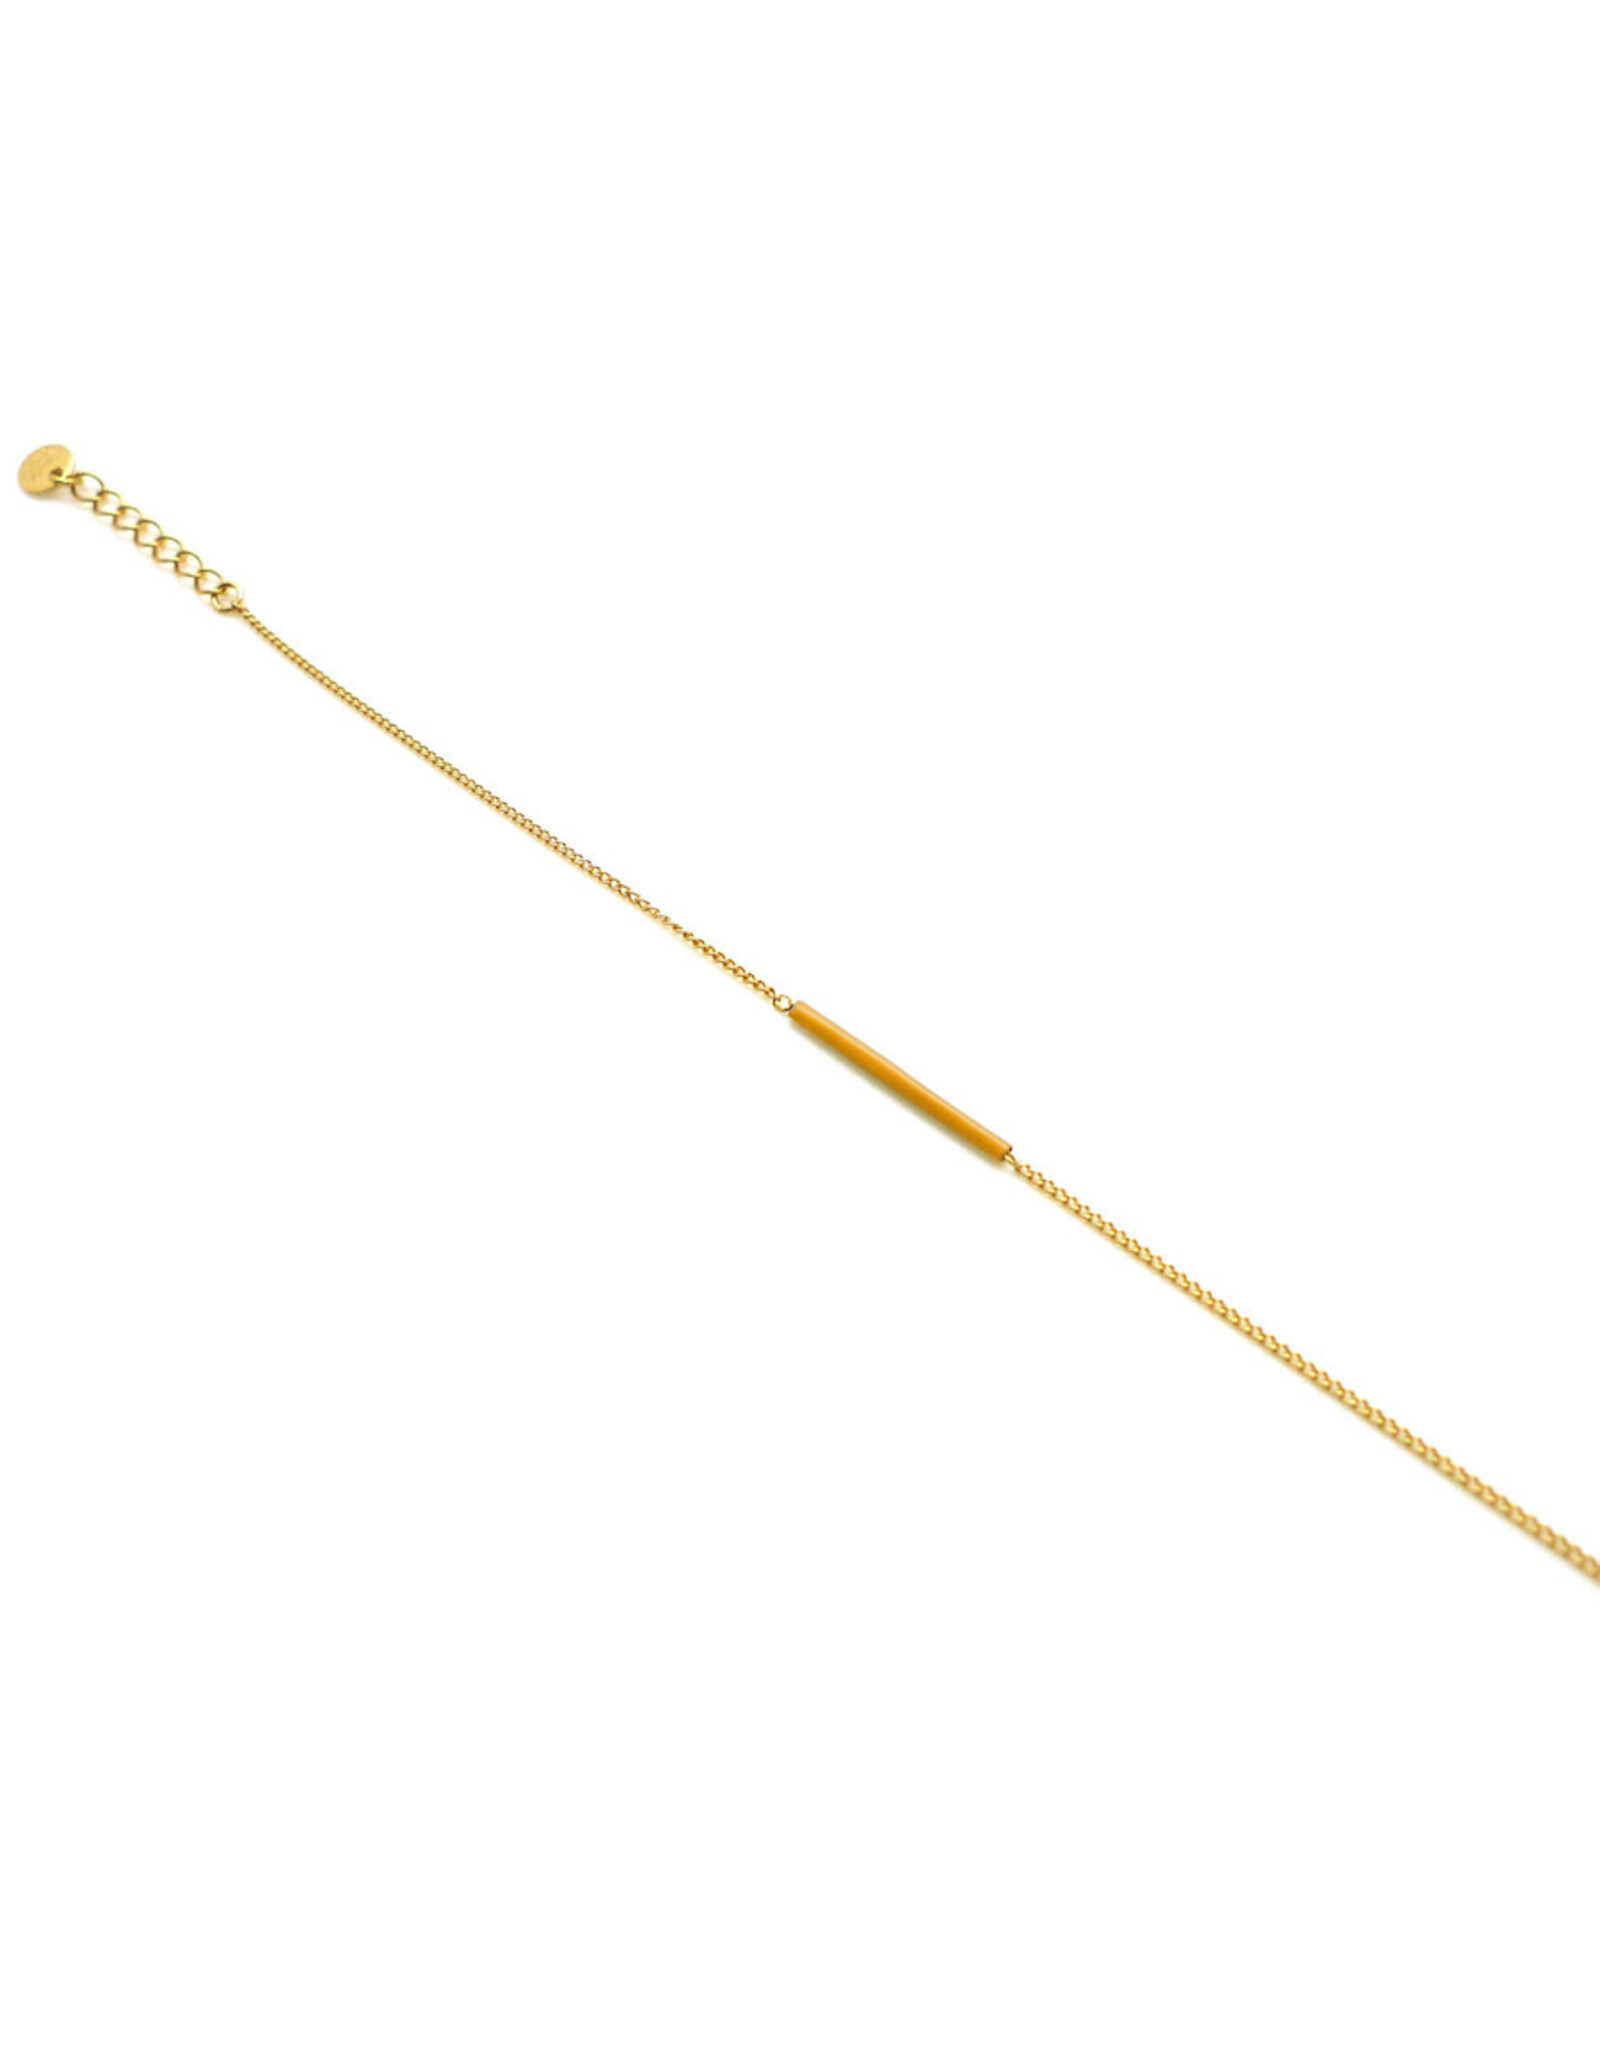 Nadja Carlotti Armband Sparkle - Mosterd - Messing verguld  - Lengt 16 cm + 2 cm - Tube 2 x 0,2 cm